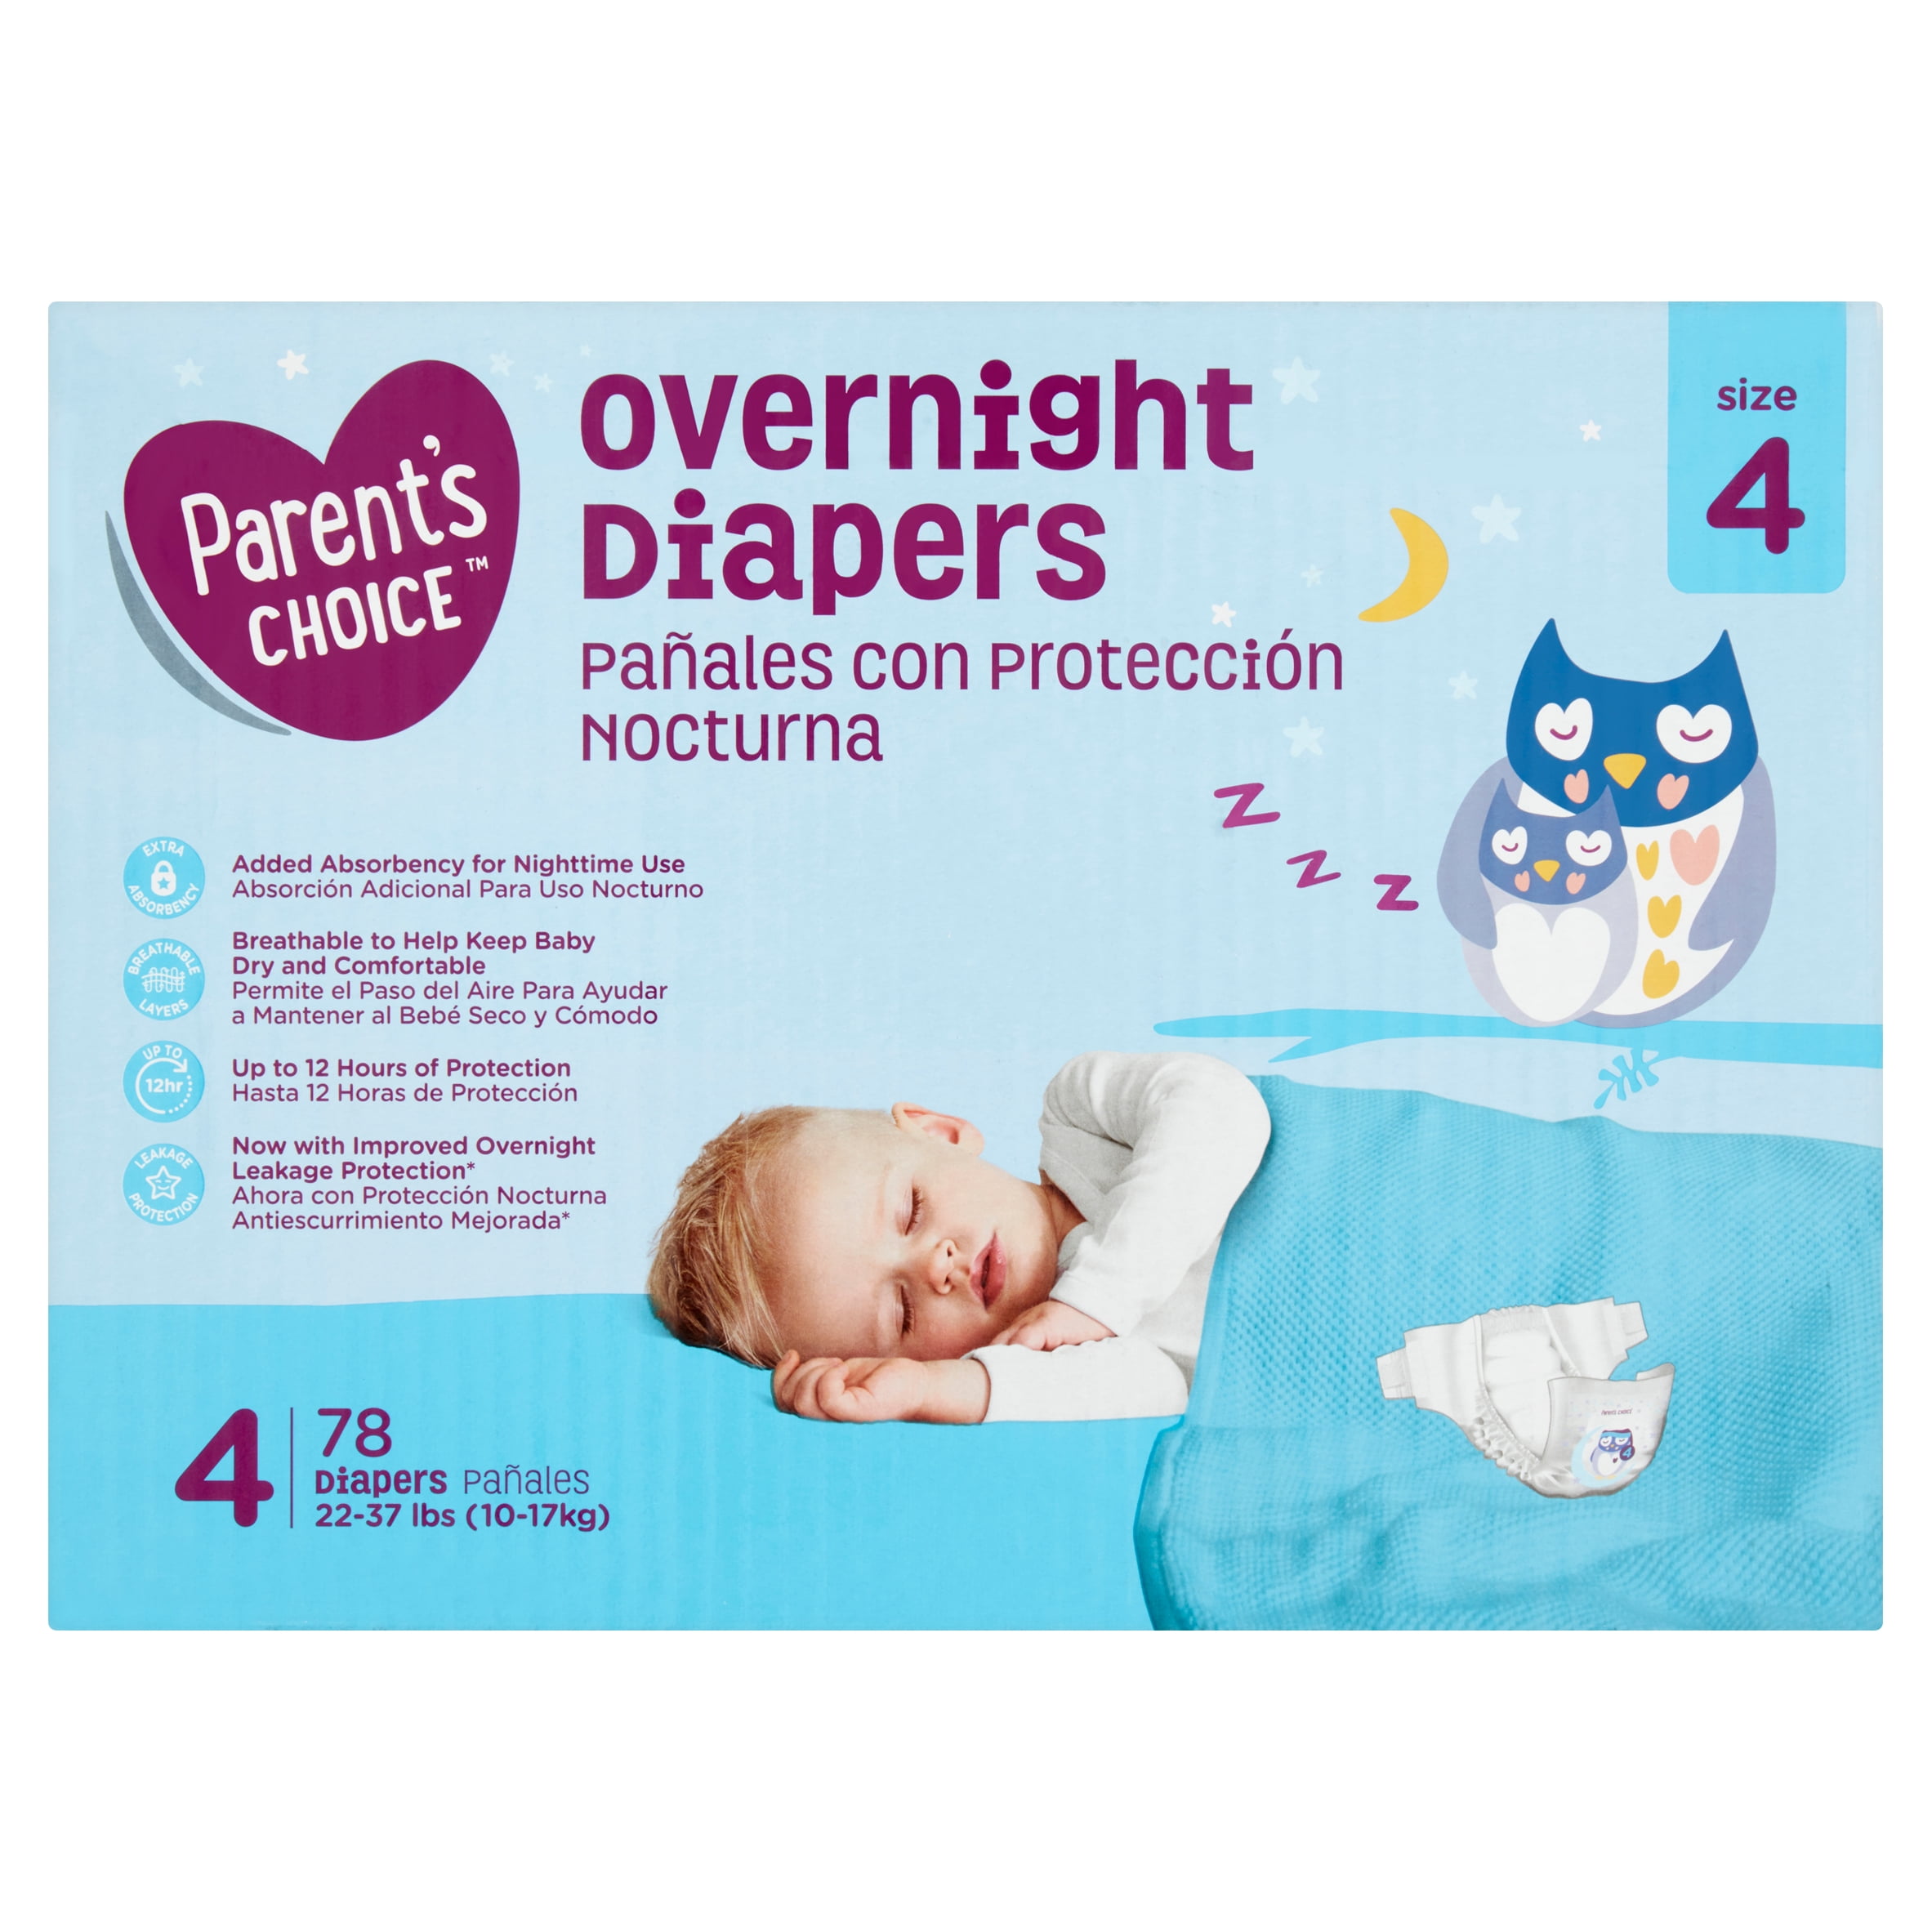 parent choice diapers size 4